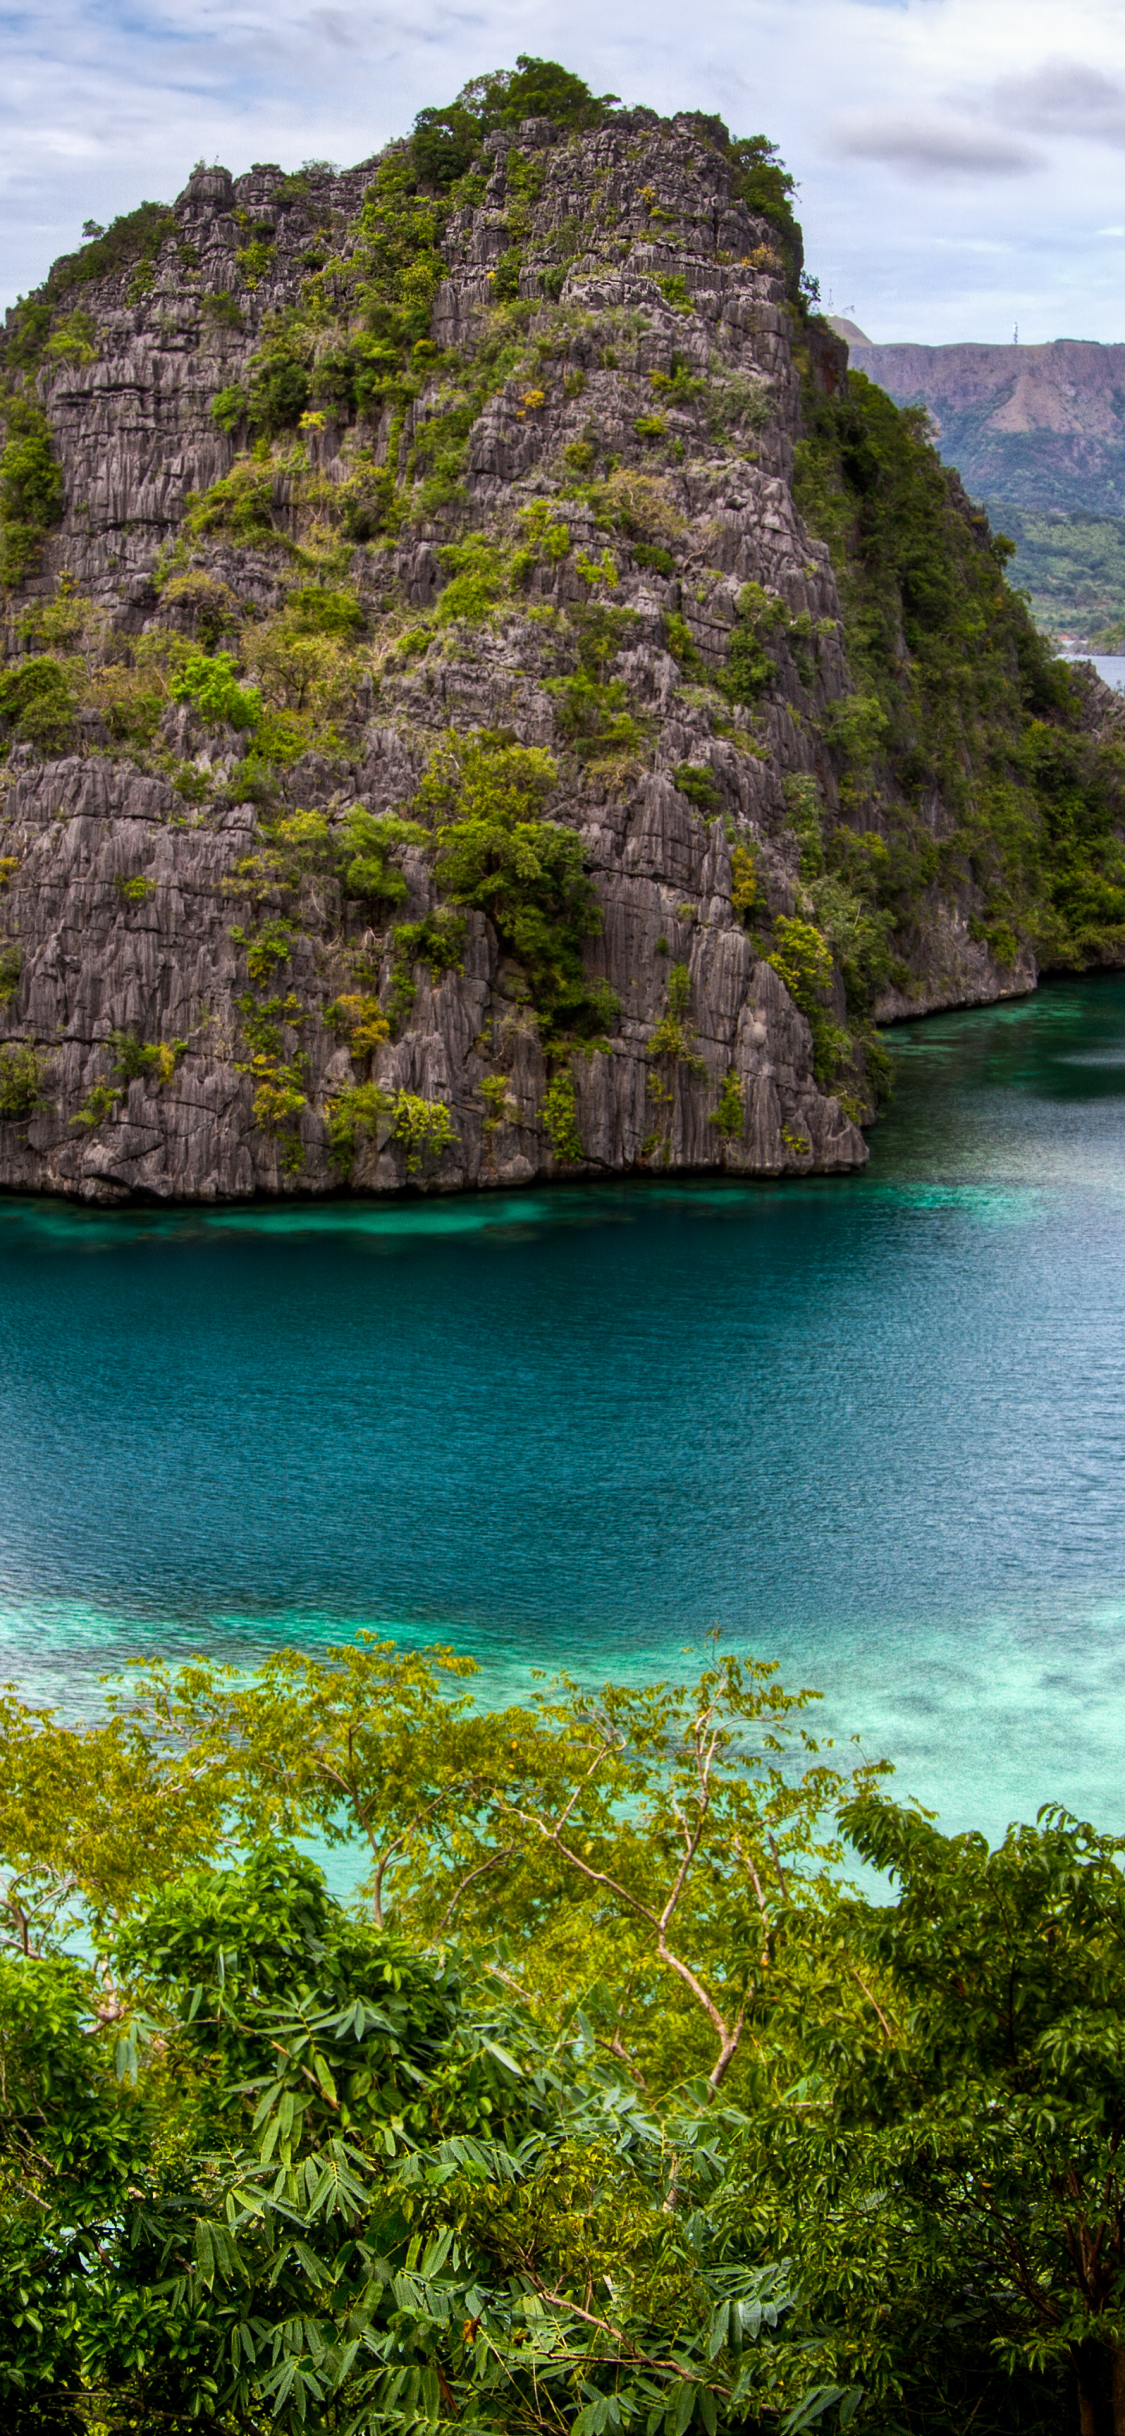 Ocean Rocks in the Phillipines by Agustin Rafael Reyes